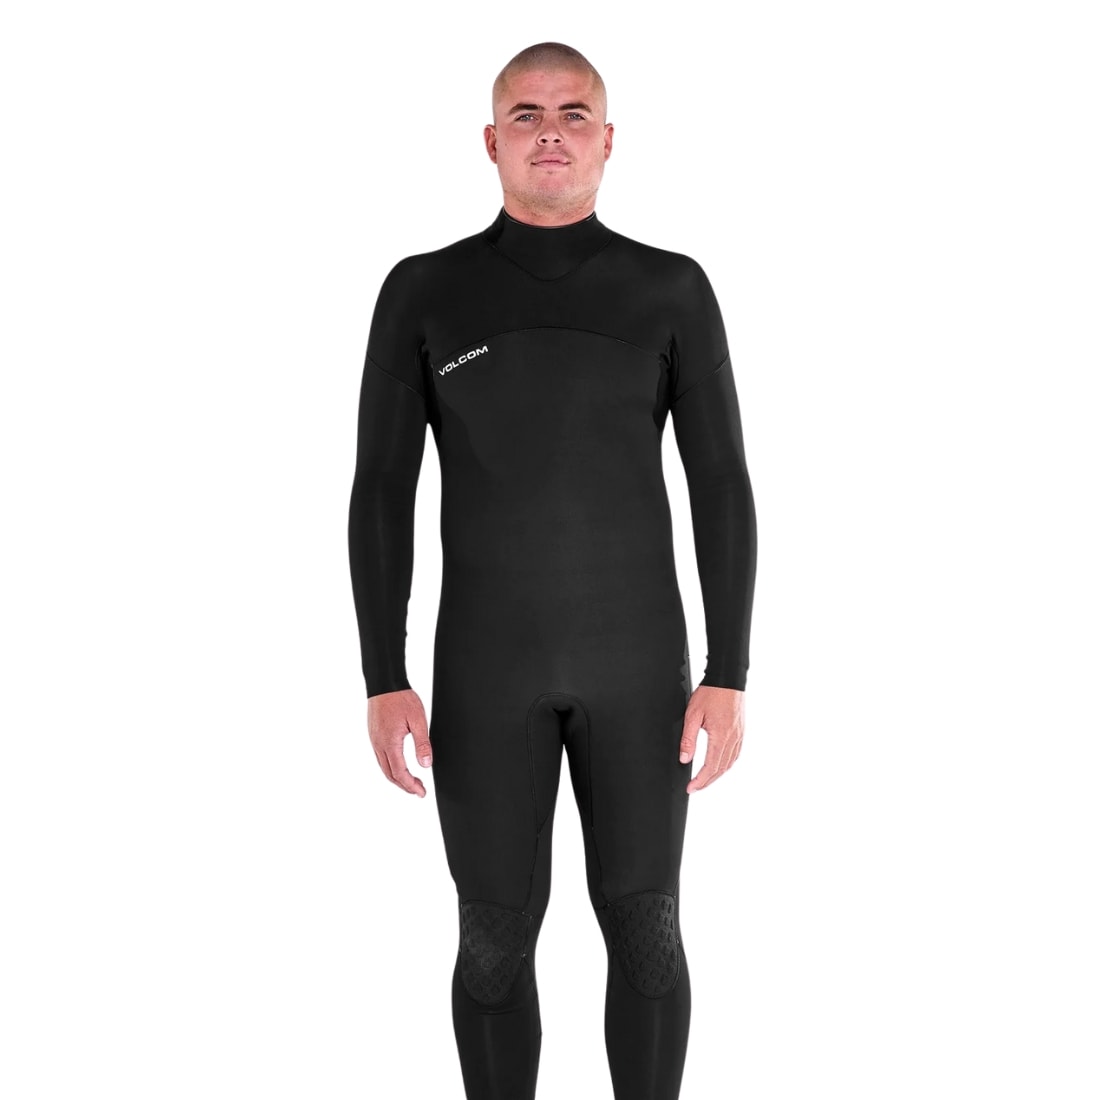 Volcom 3/2mm Modulator Back Zip Wetsuit - Black - Mens Full Length Wetsuit by Volcom LT (large tall)